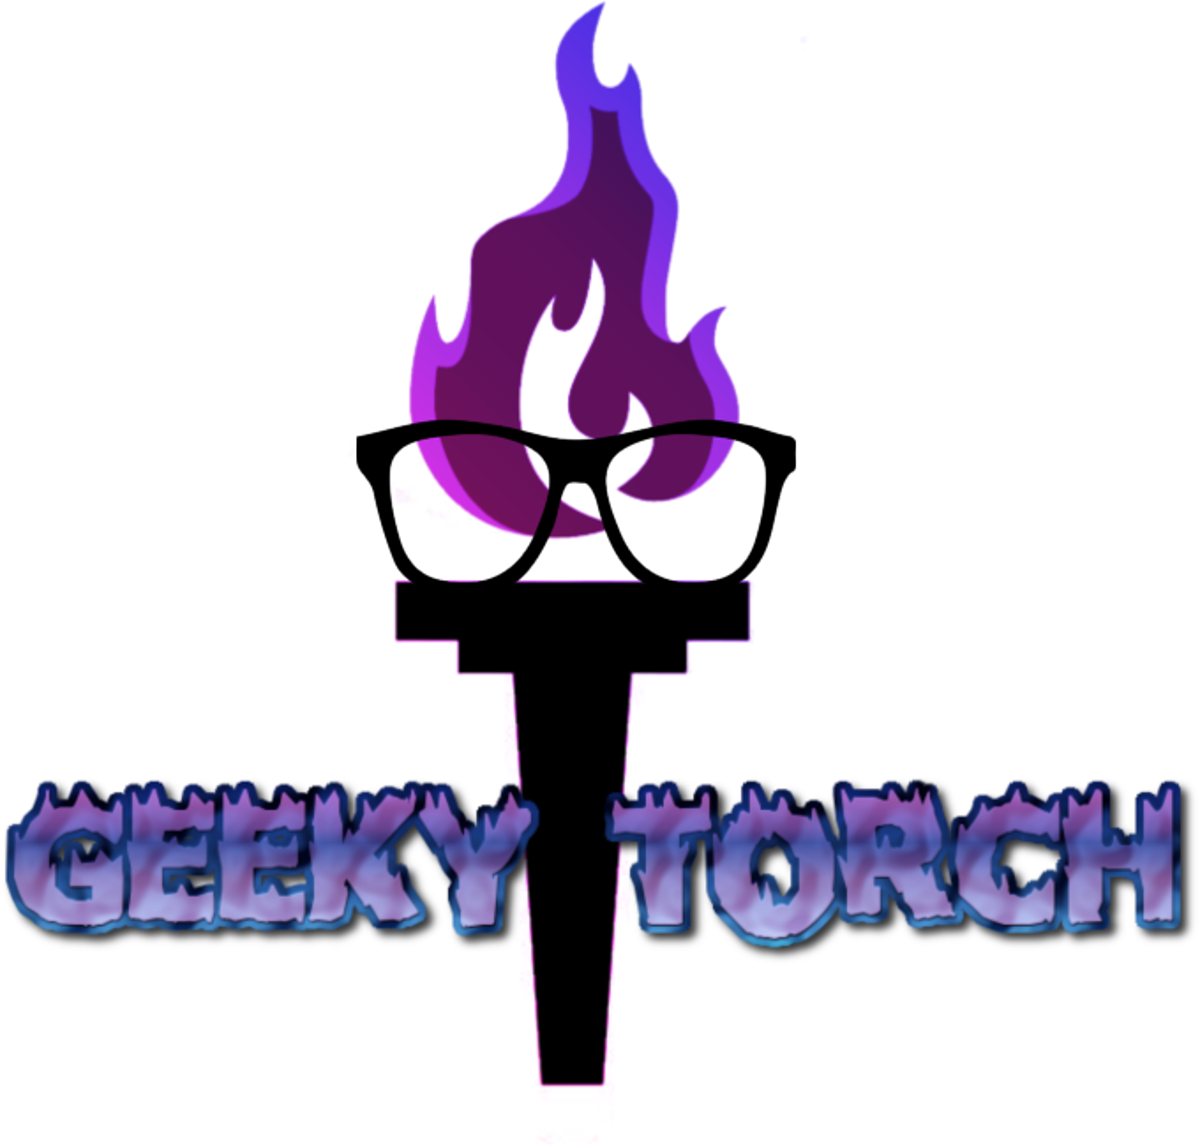 Geeky Torch - Geeky Torch (1200x1147)